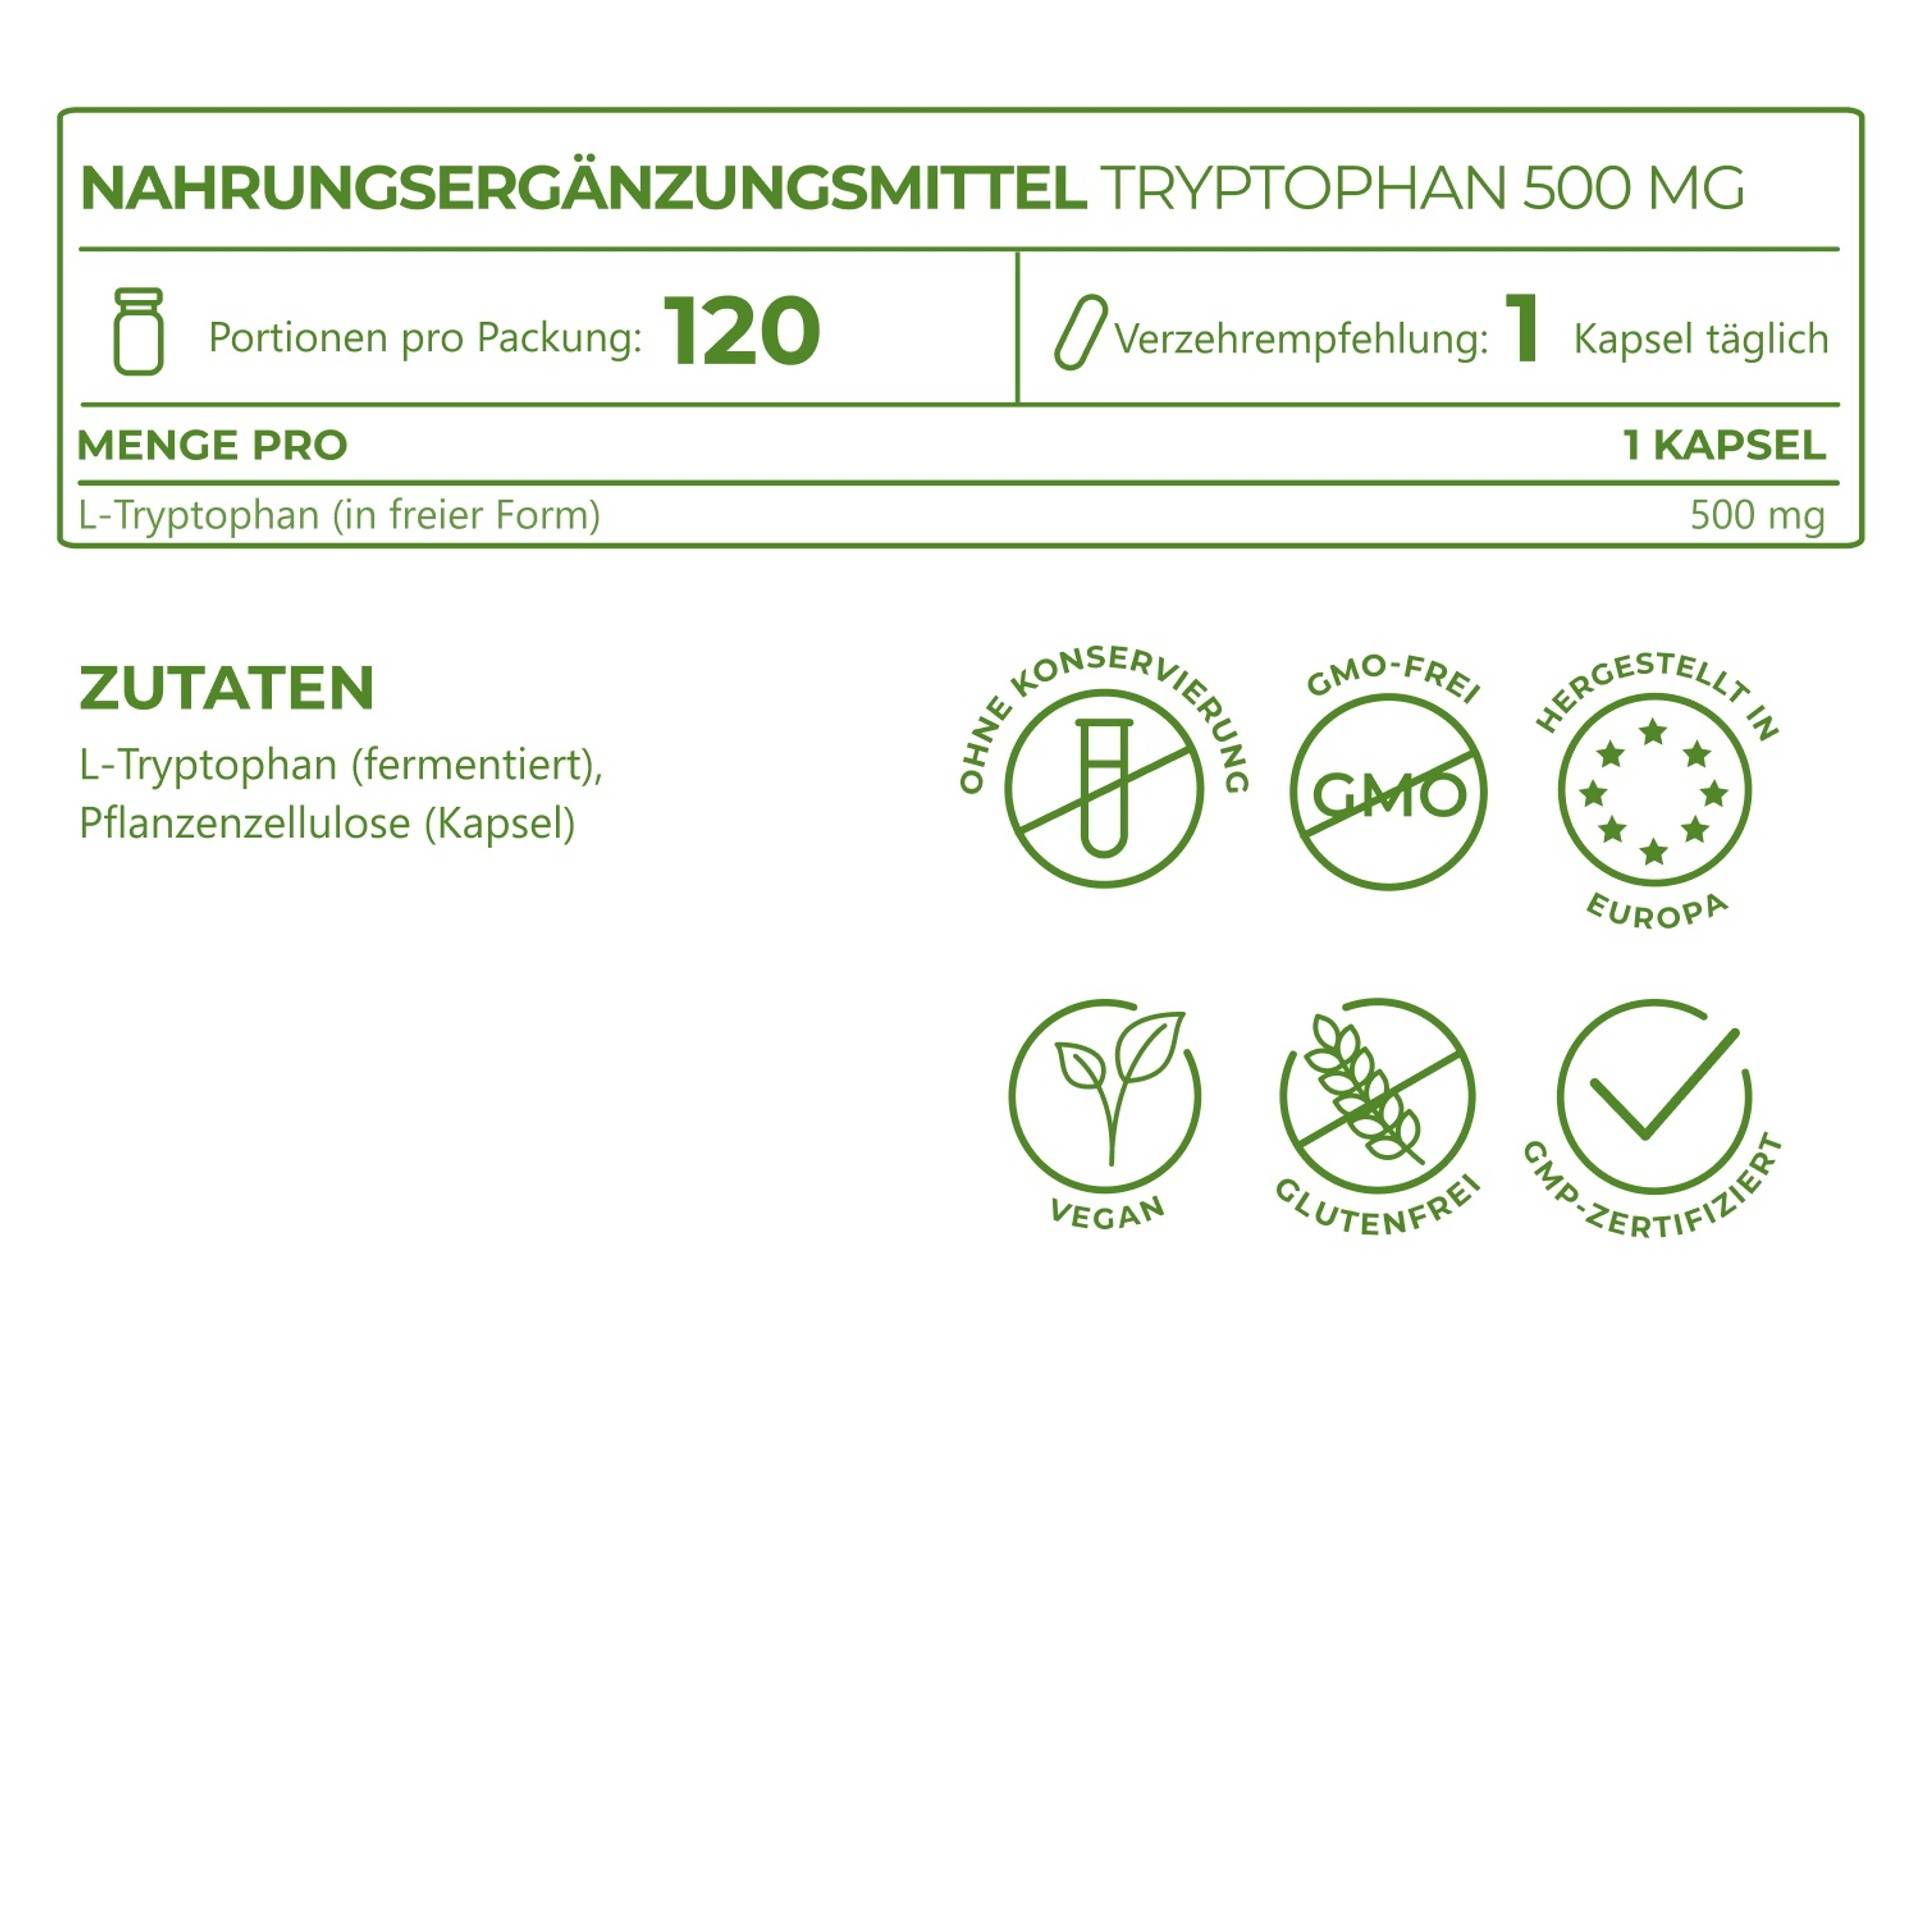 5_DE_Ingredients_Tryptophan 500 mg_6760-13.png